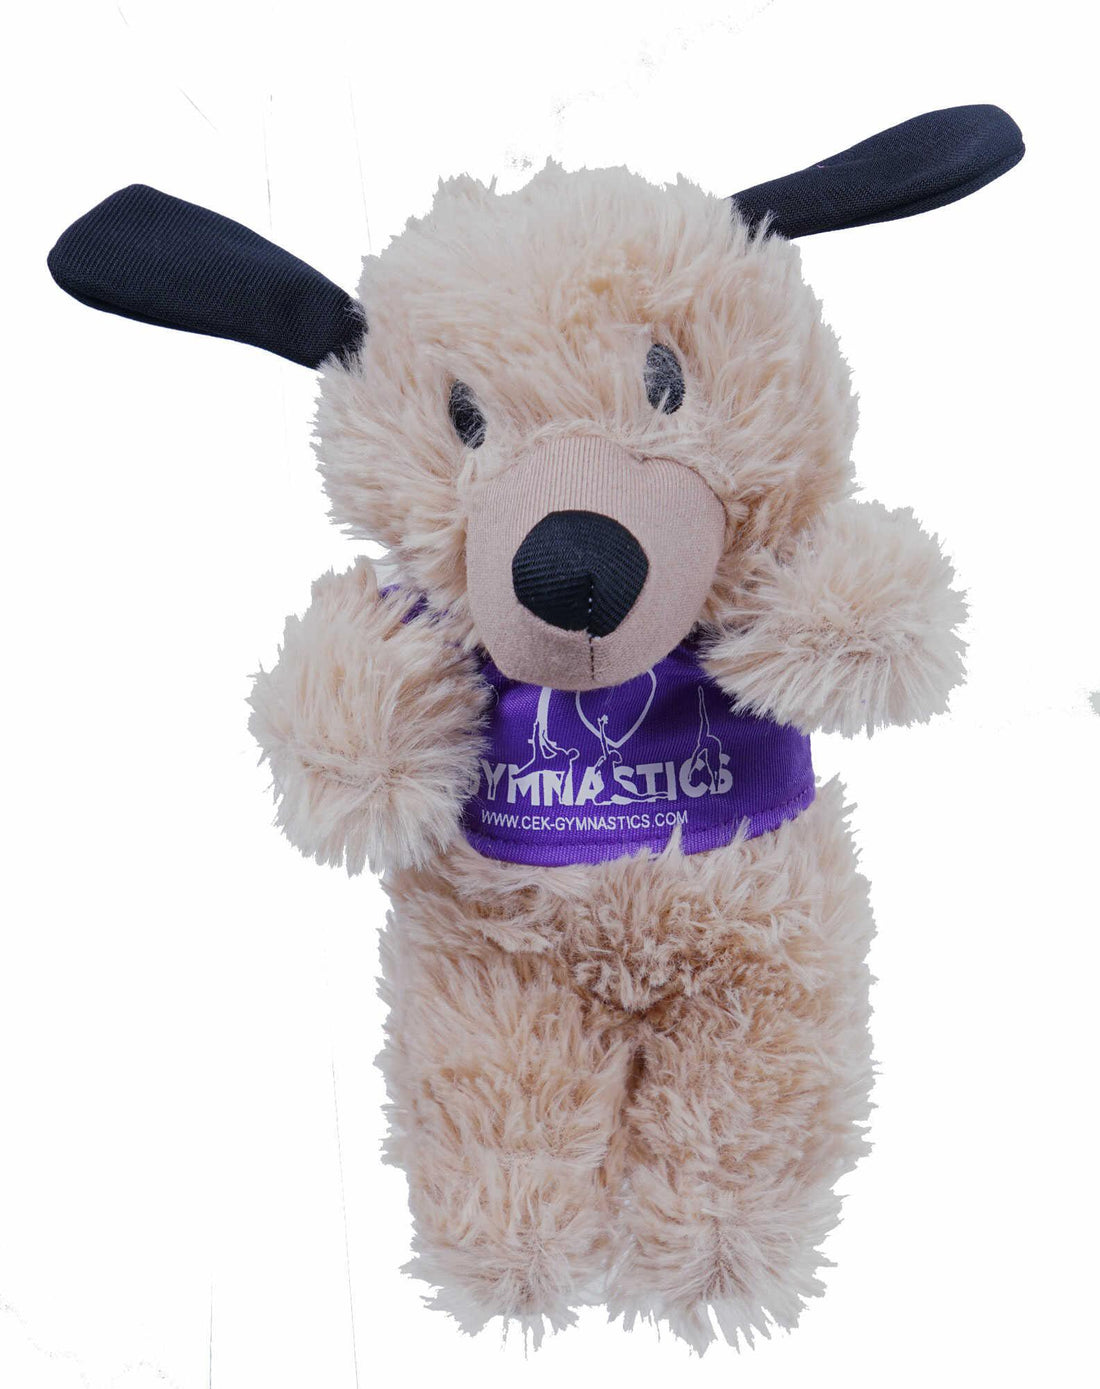 Knuffel fluffy hond met promo t-shirt